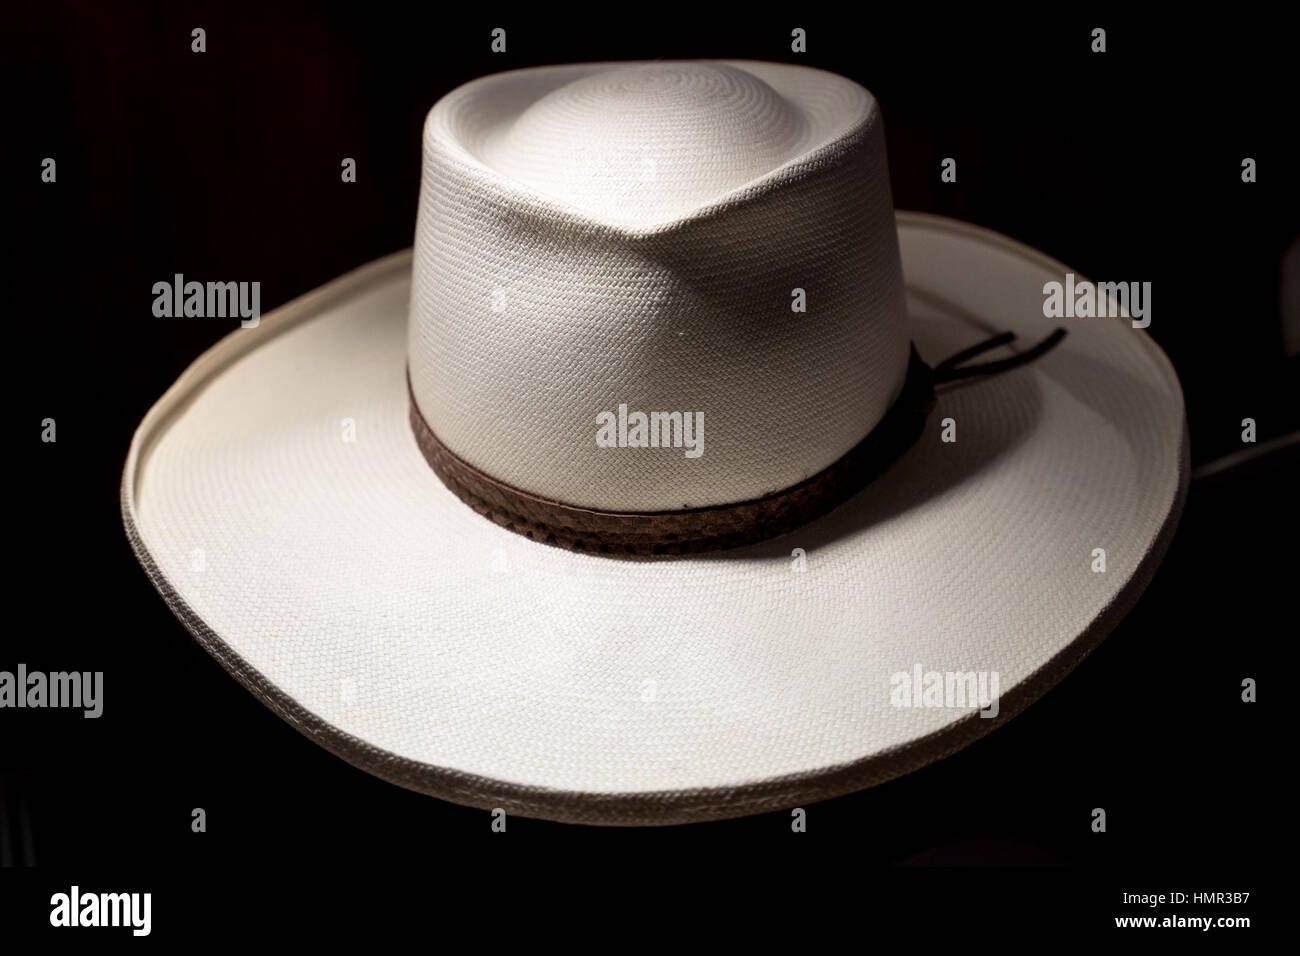 women's panama hat closeup Stock Photo